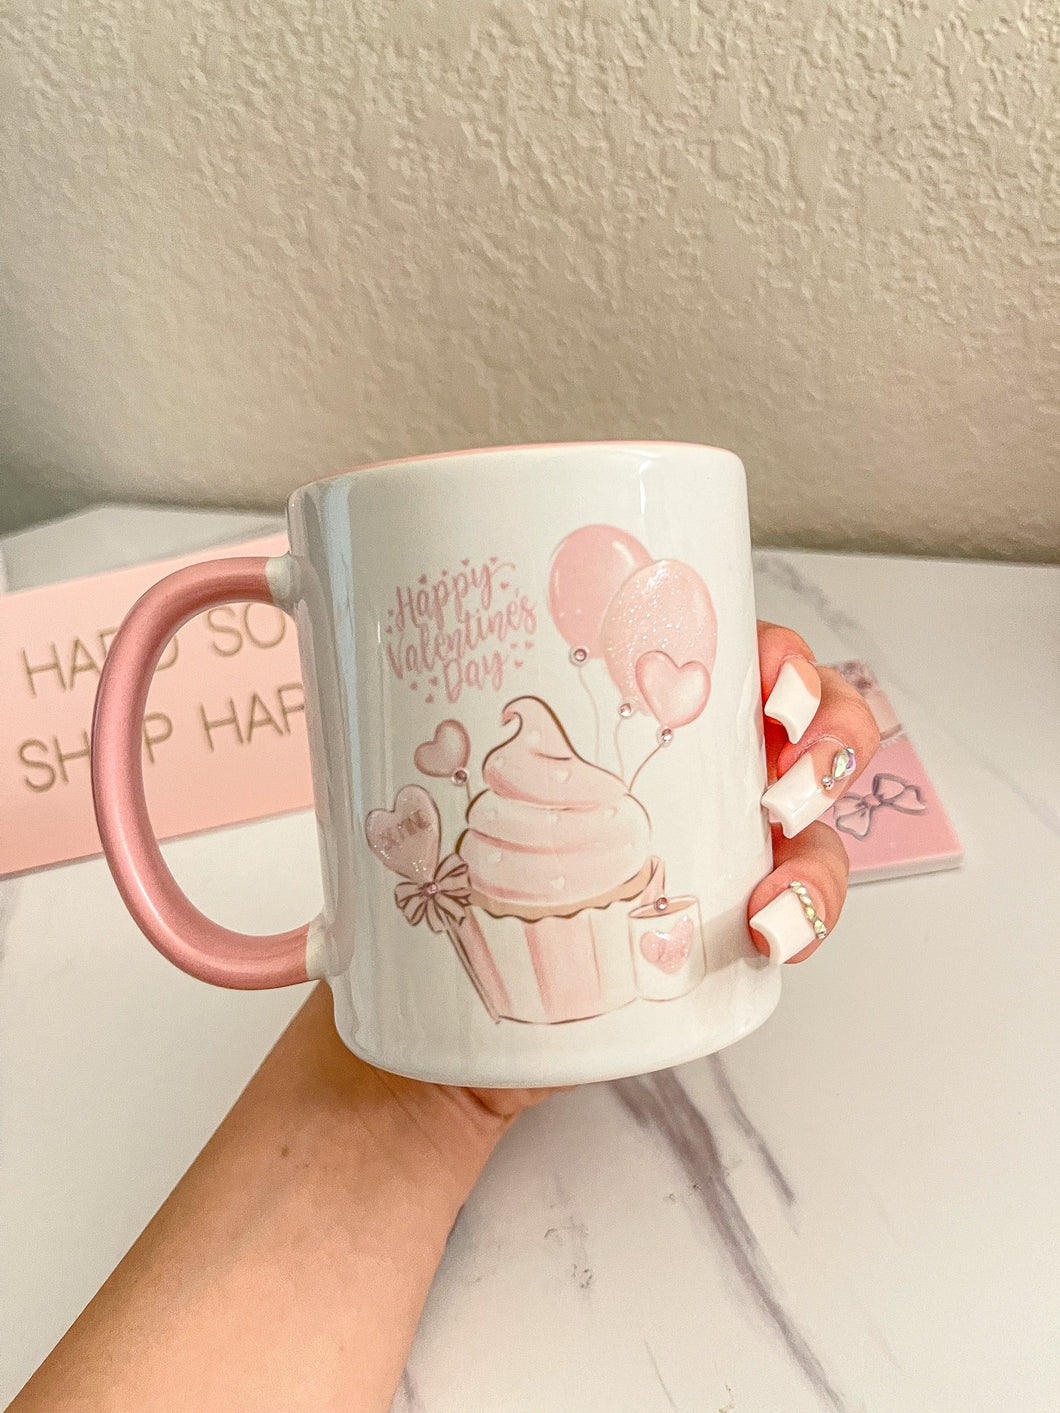 Happy Valentine’s Day mug